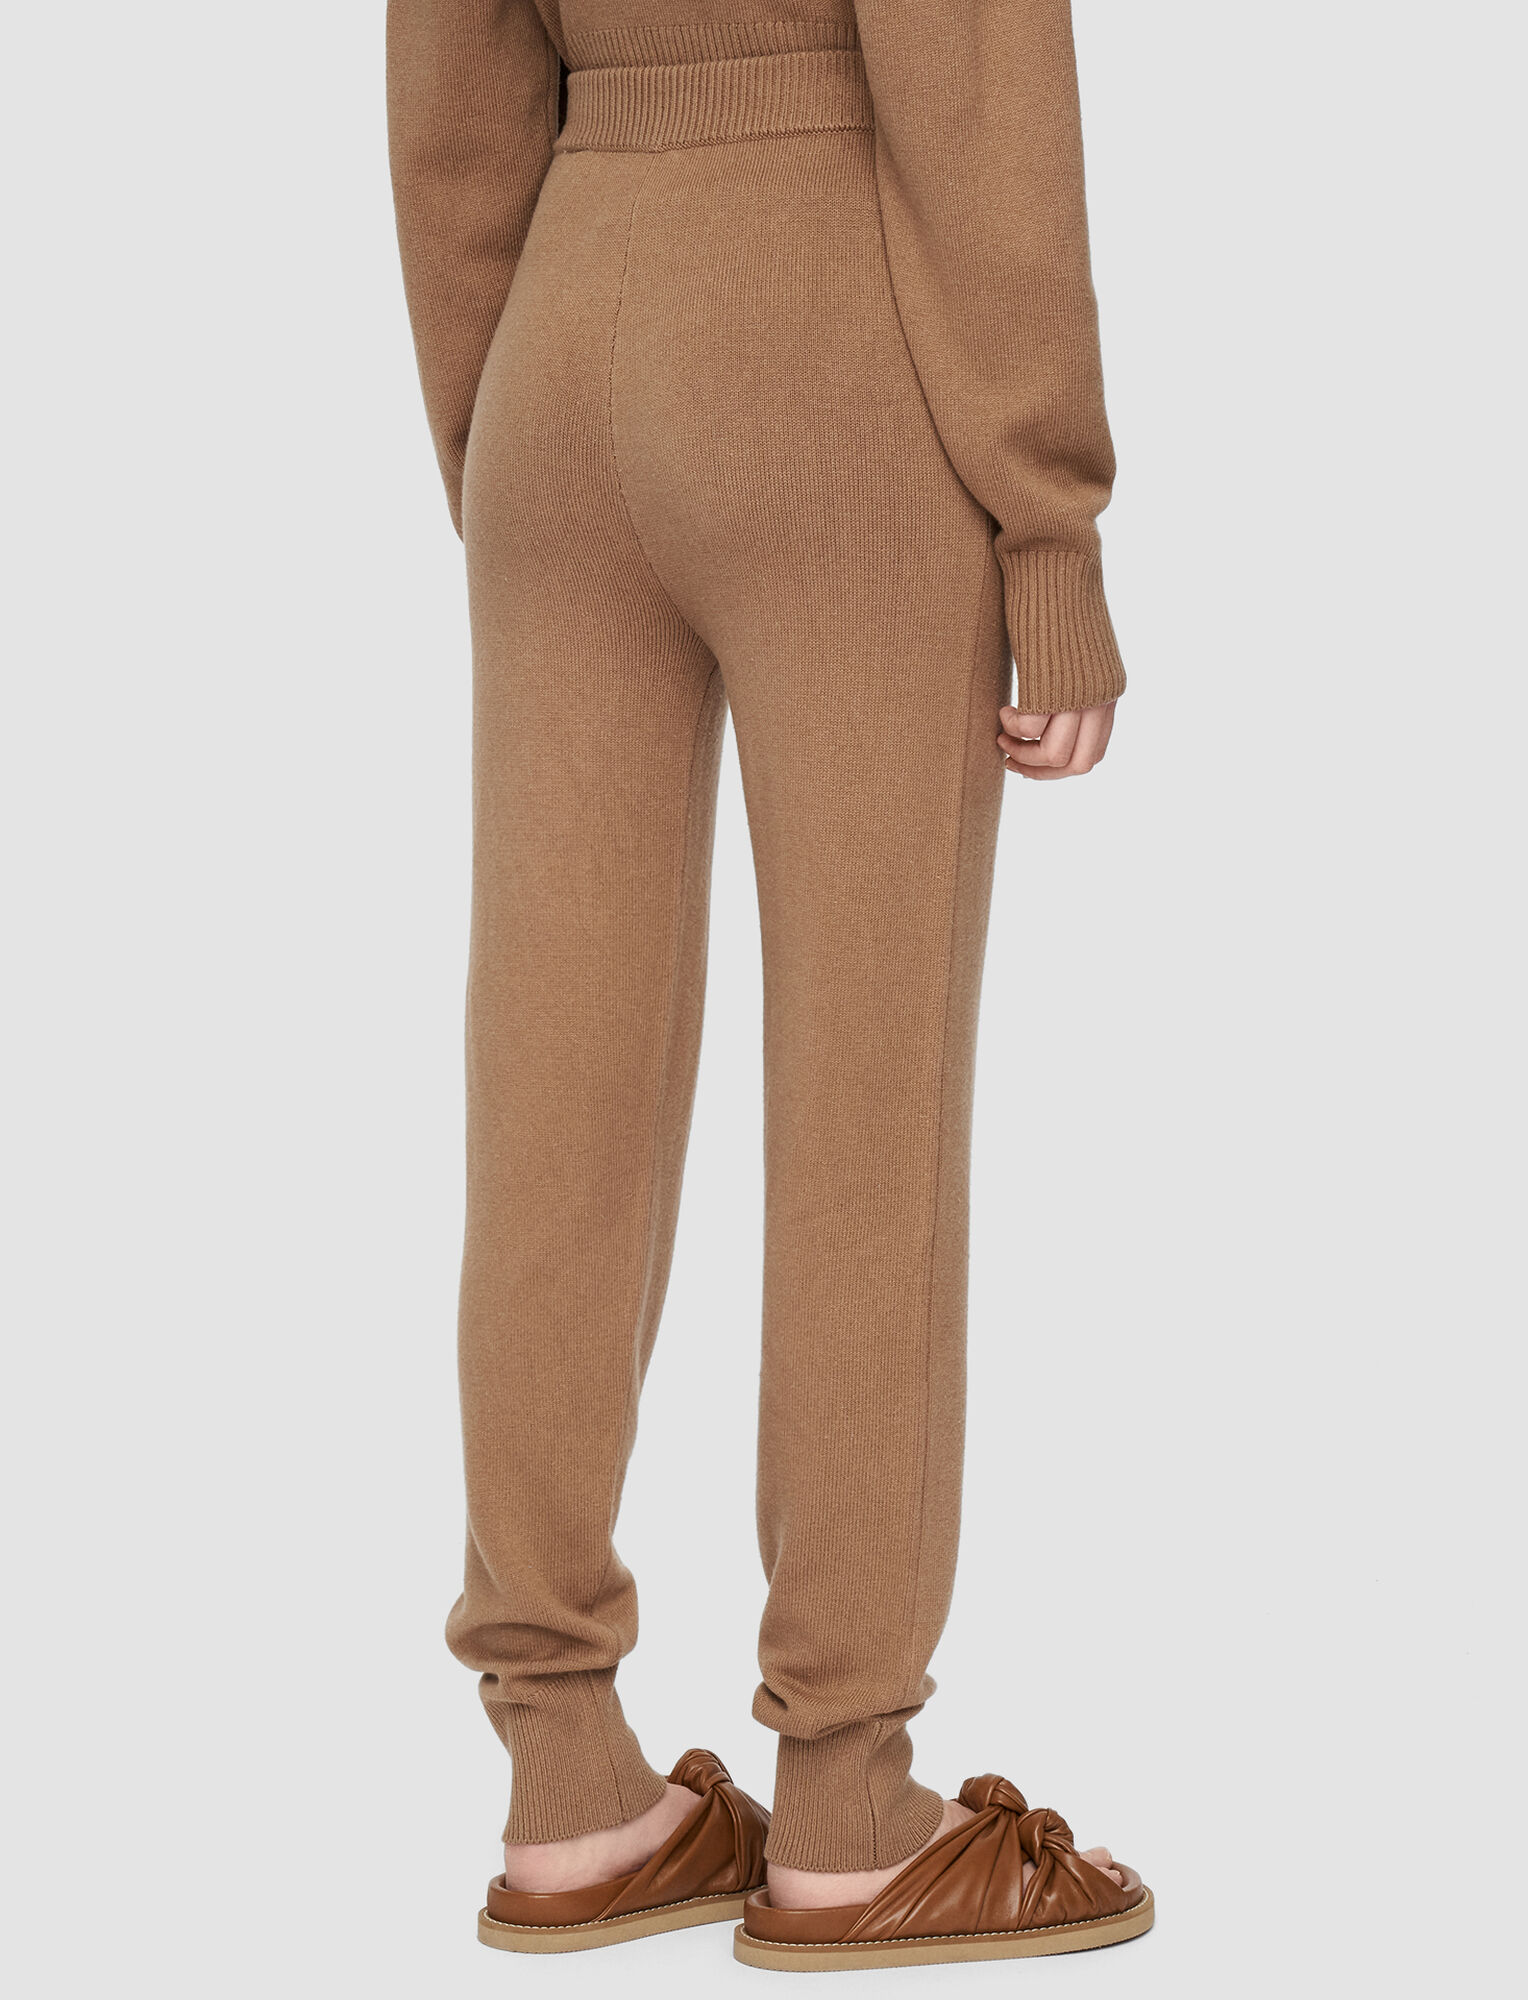 Joseph, Silk Cashmere Loungewear Trousers, in Camel